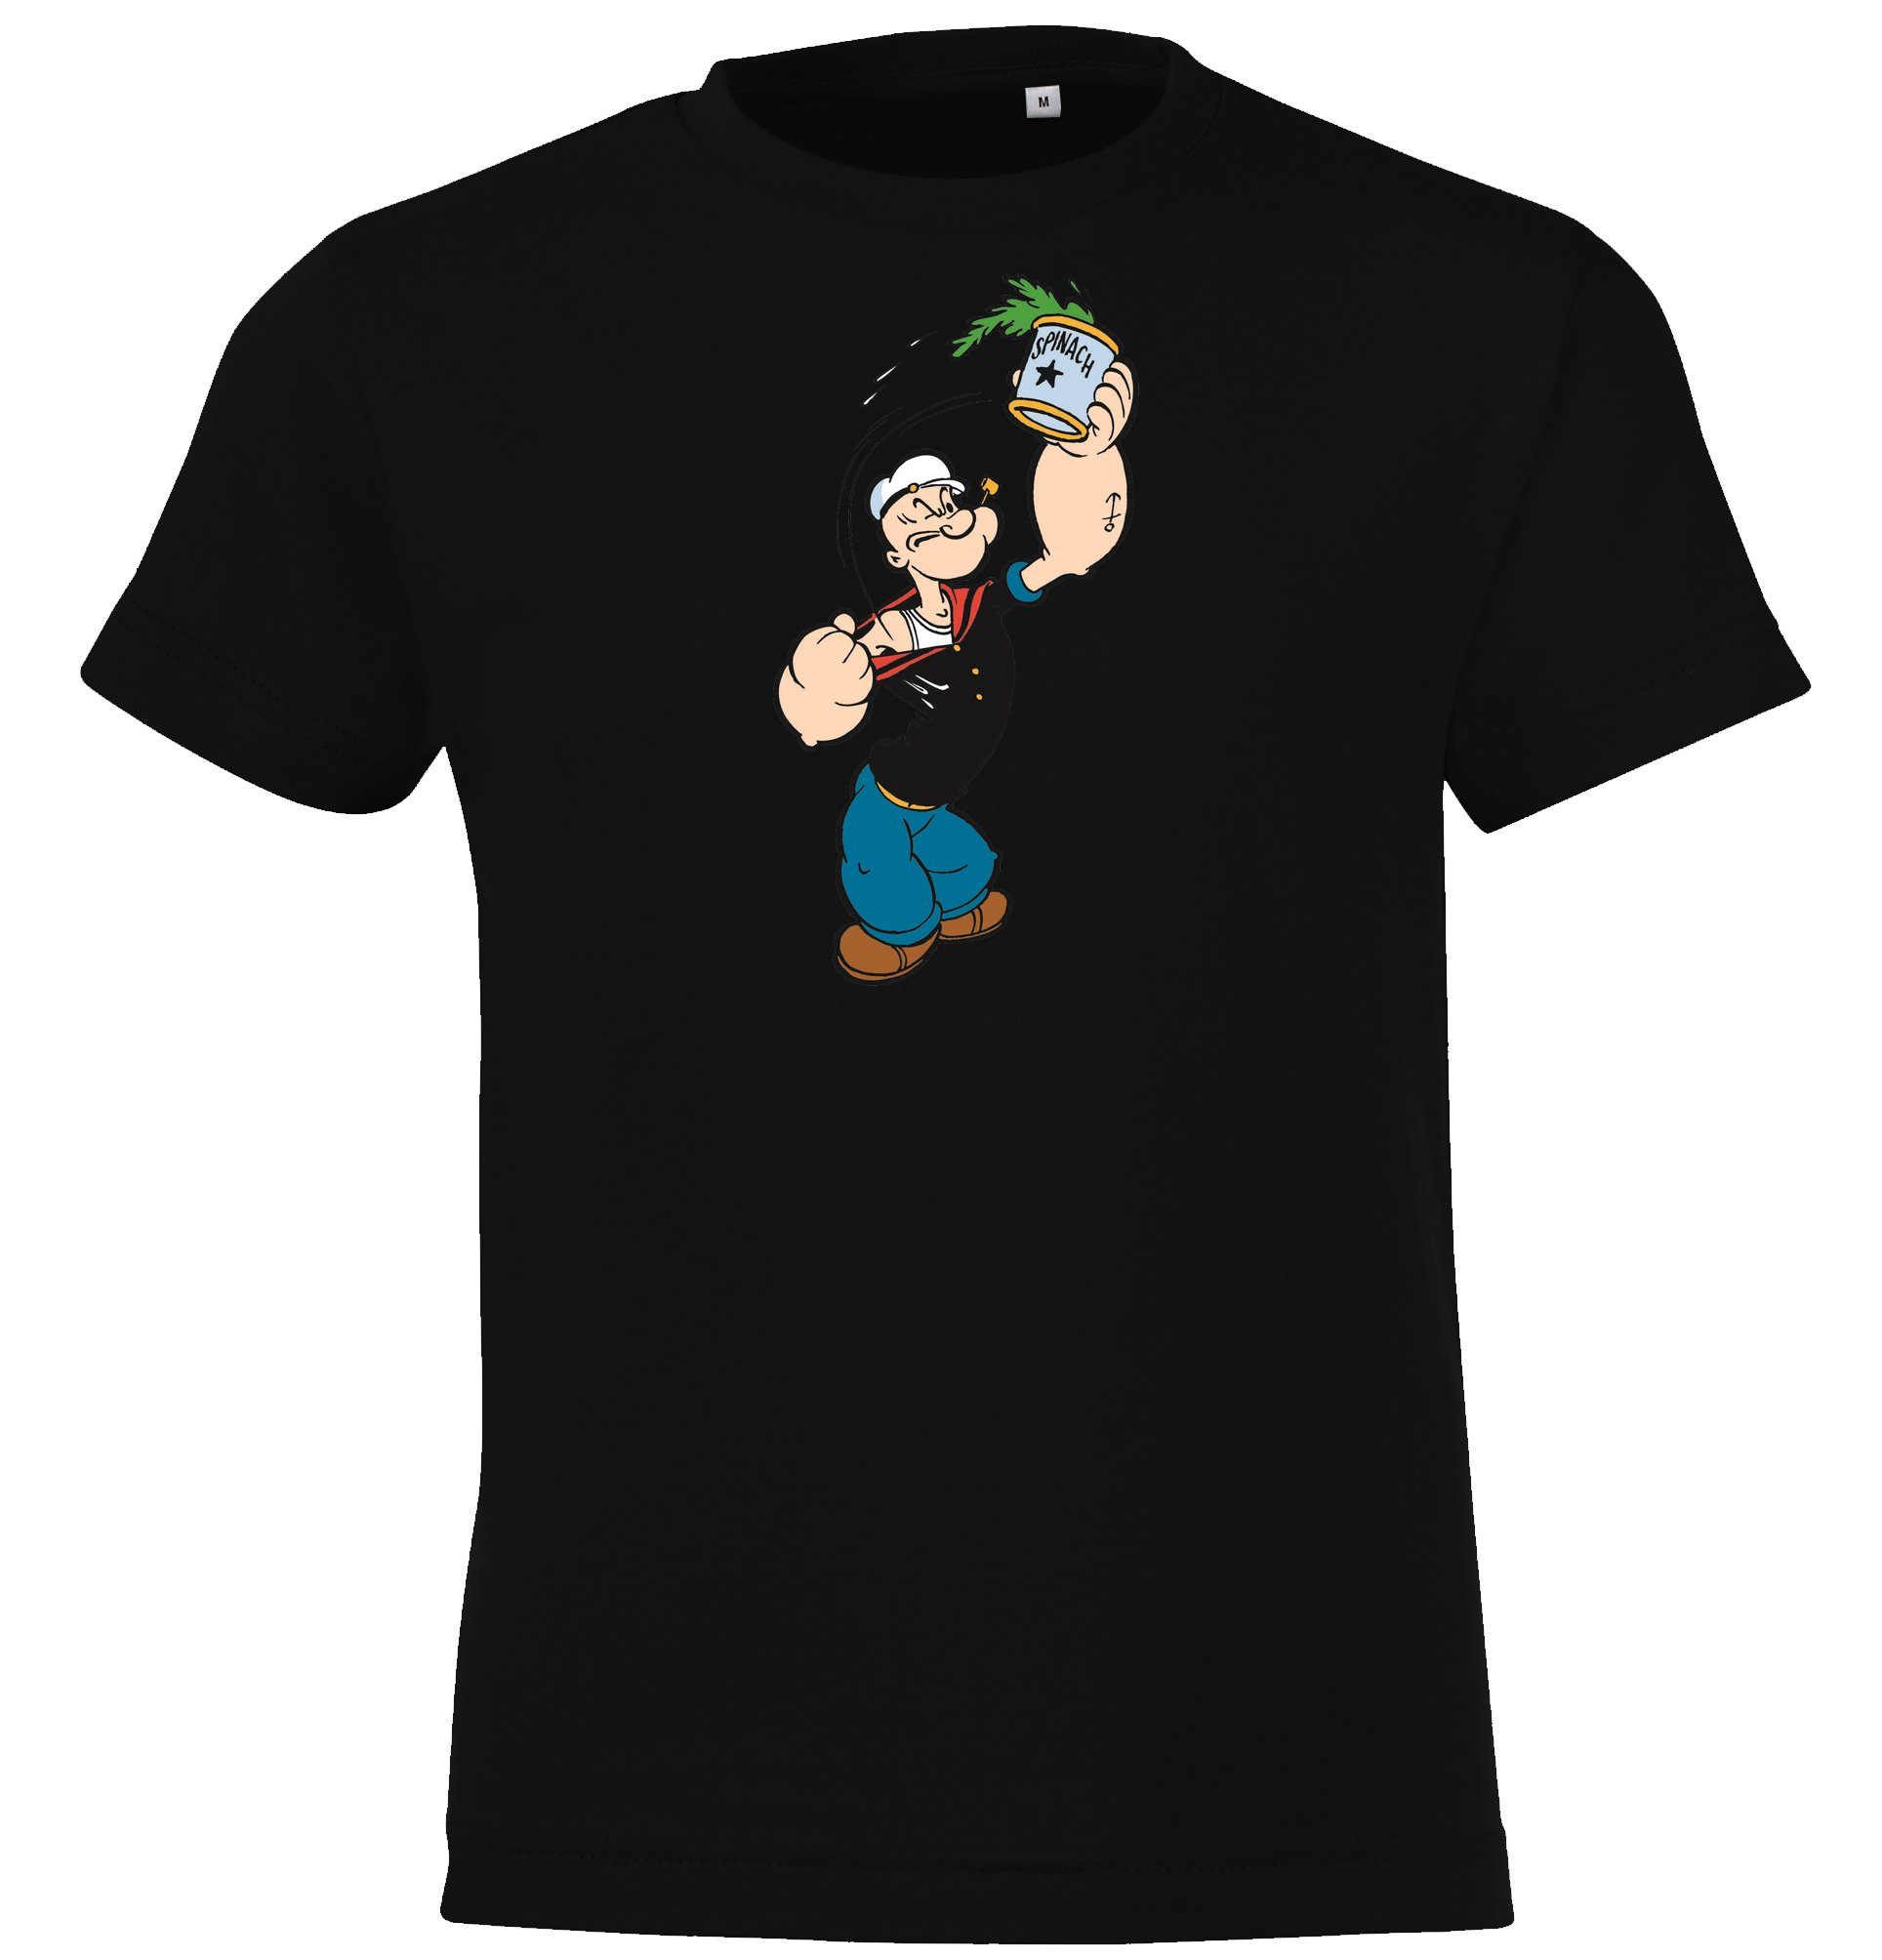 Limitierter Outlet-Preis! Youth Designz T-Shirt Kinder T-Shirt Front Mit Modell trendigem Print Schwarz Popeye